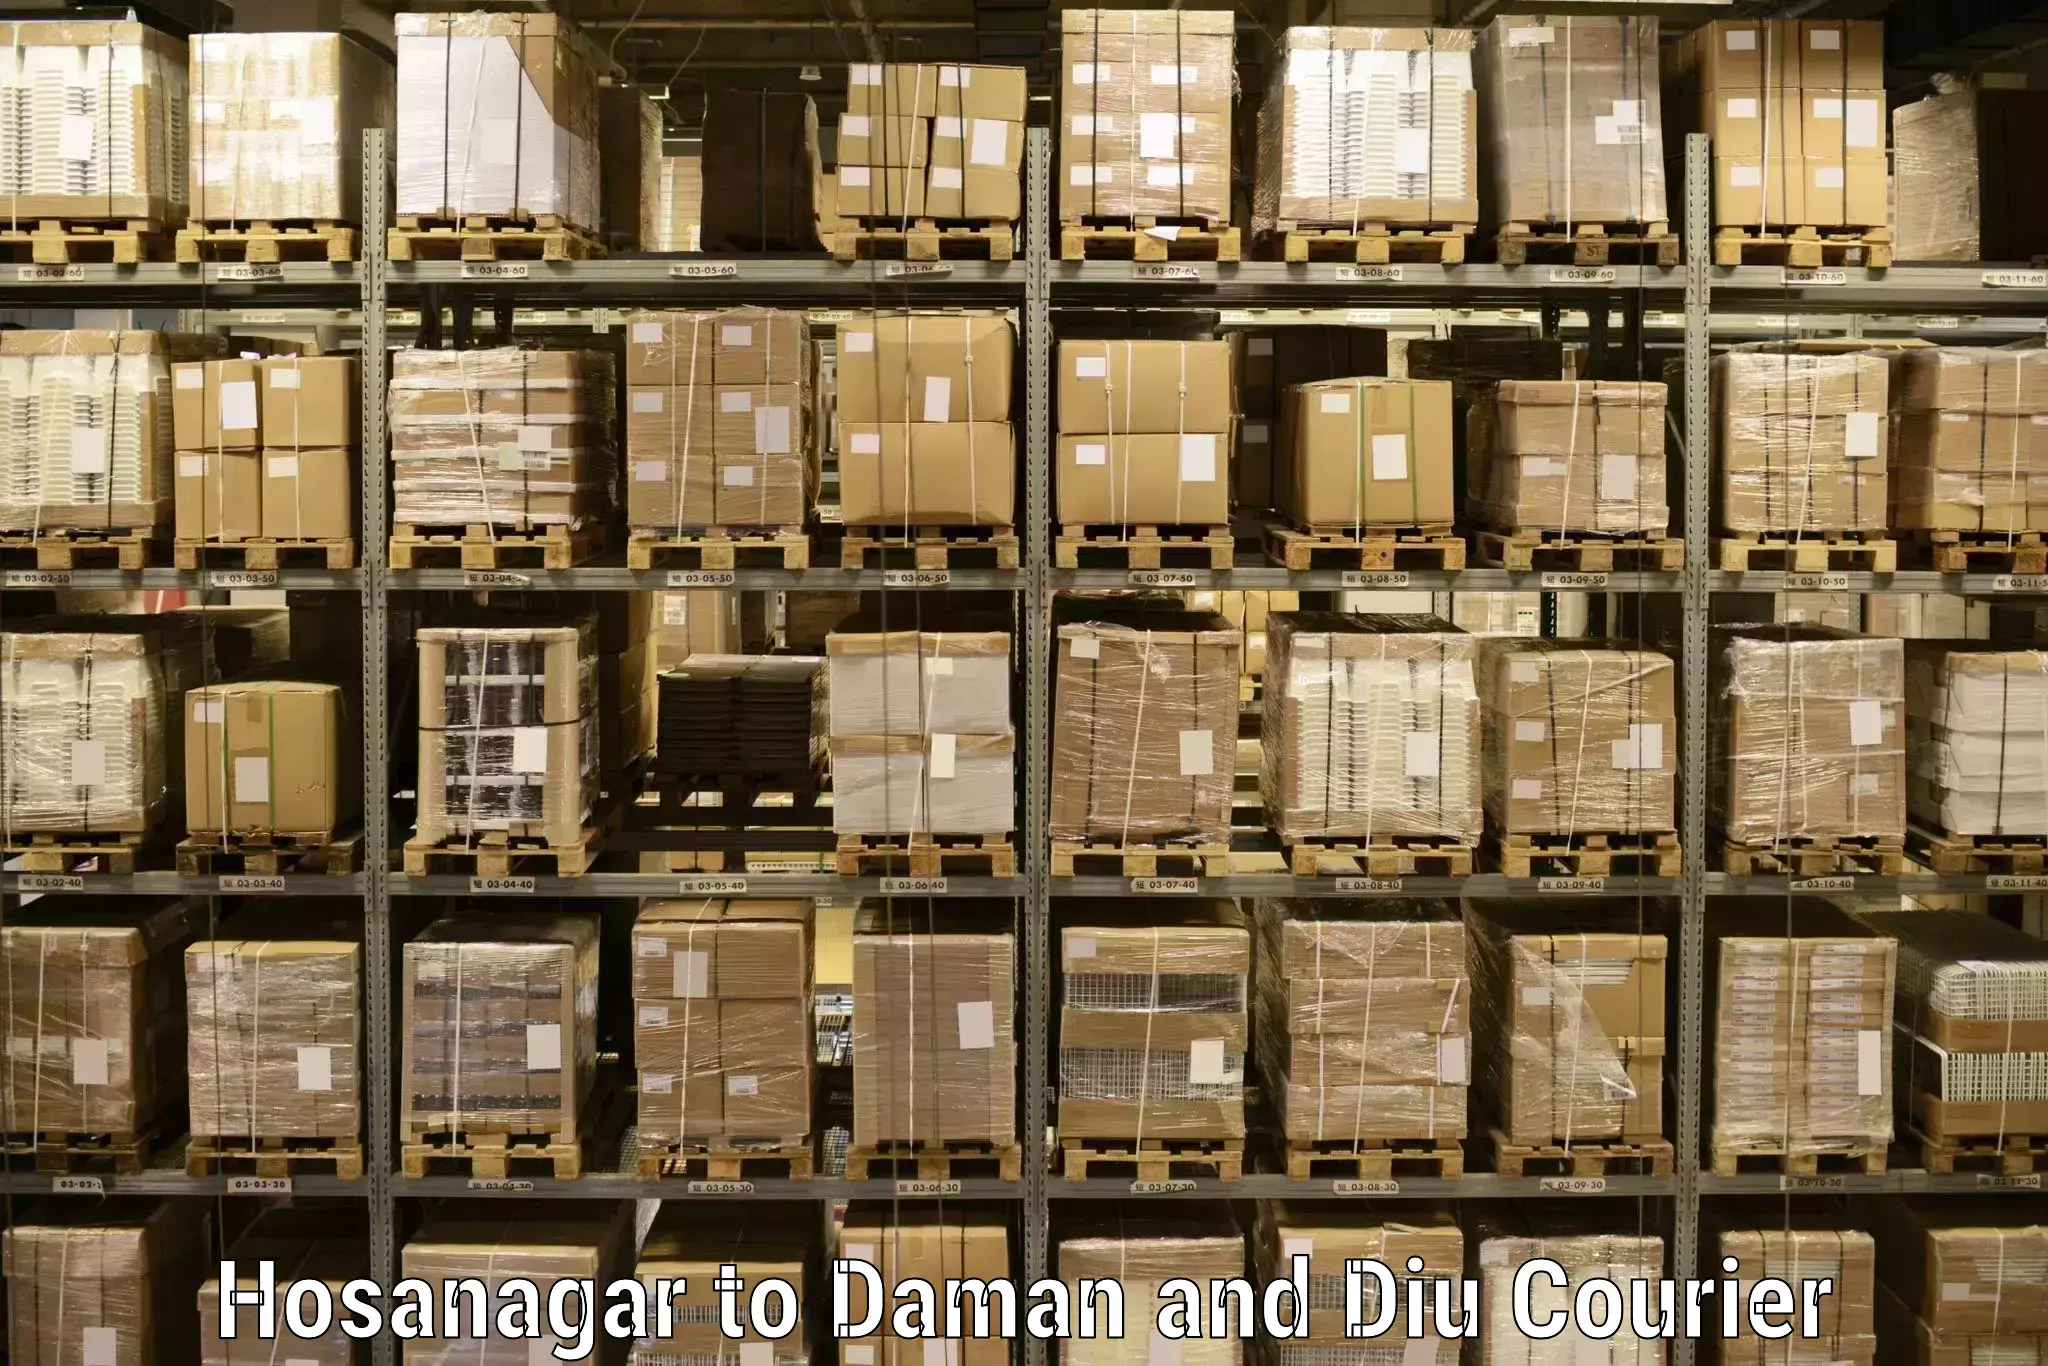 Courier service efficiency Hosanagar to Daman